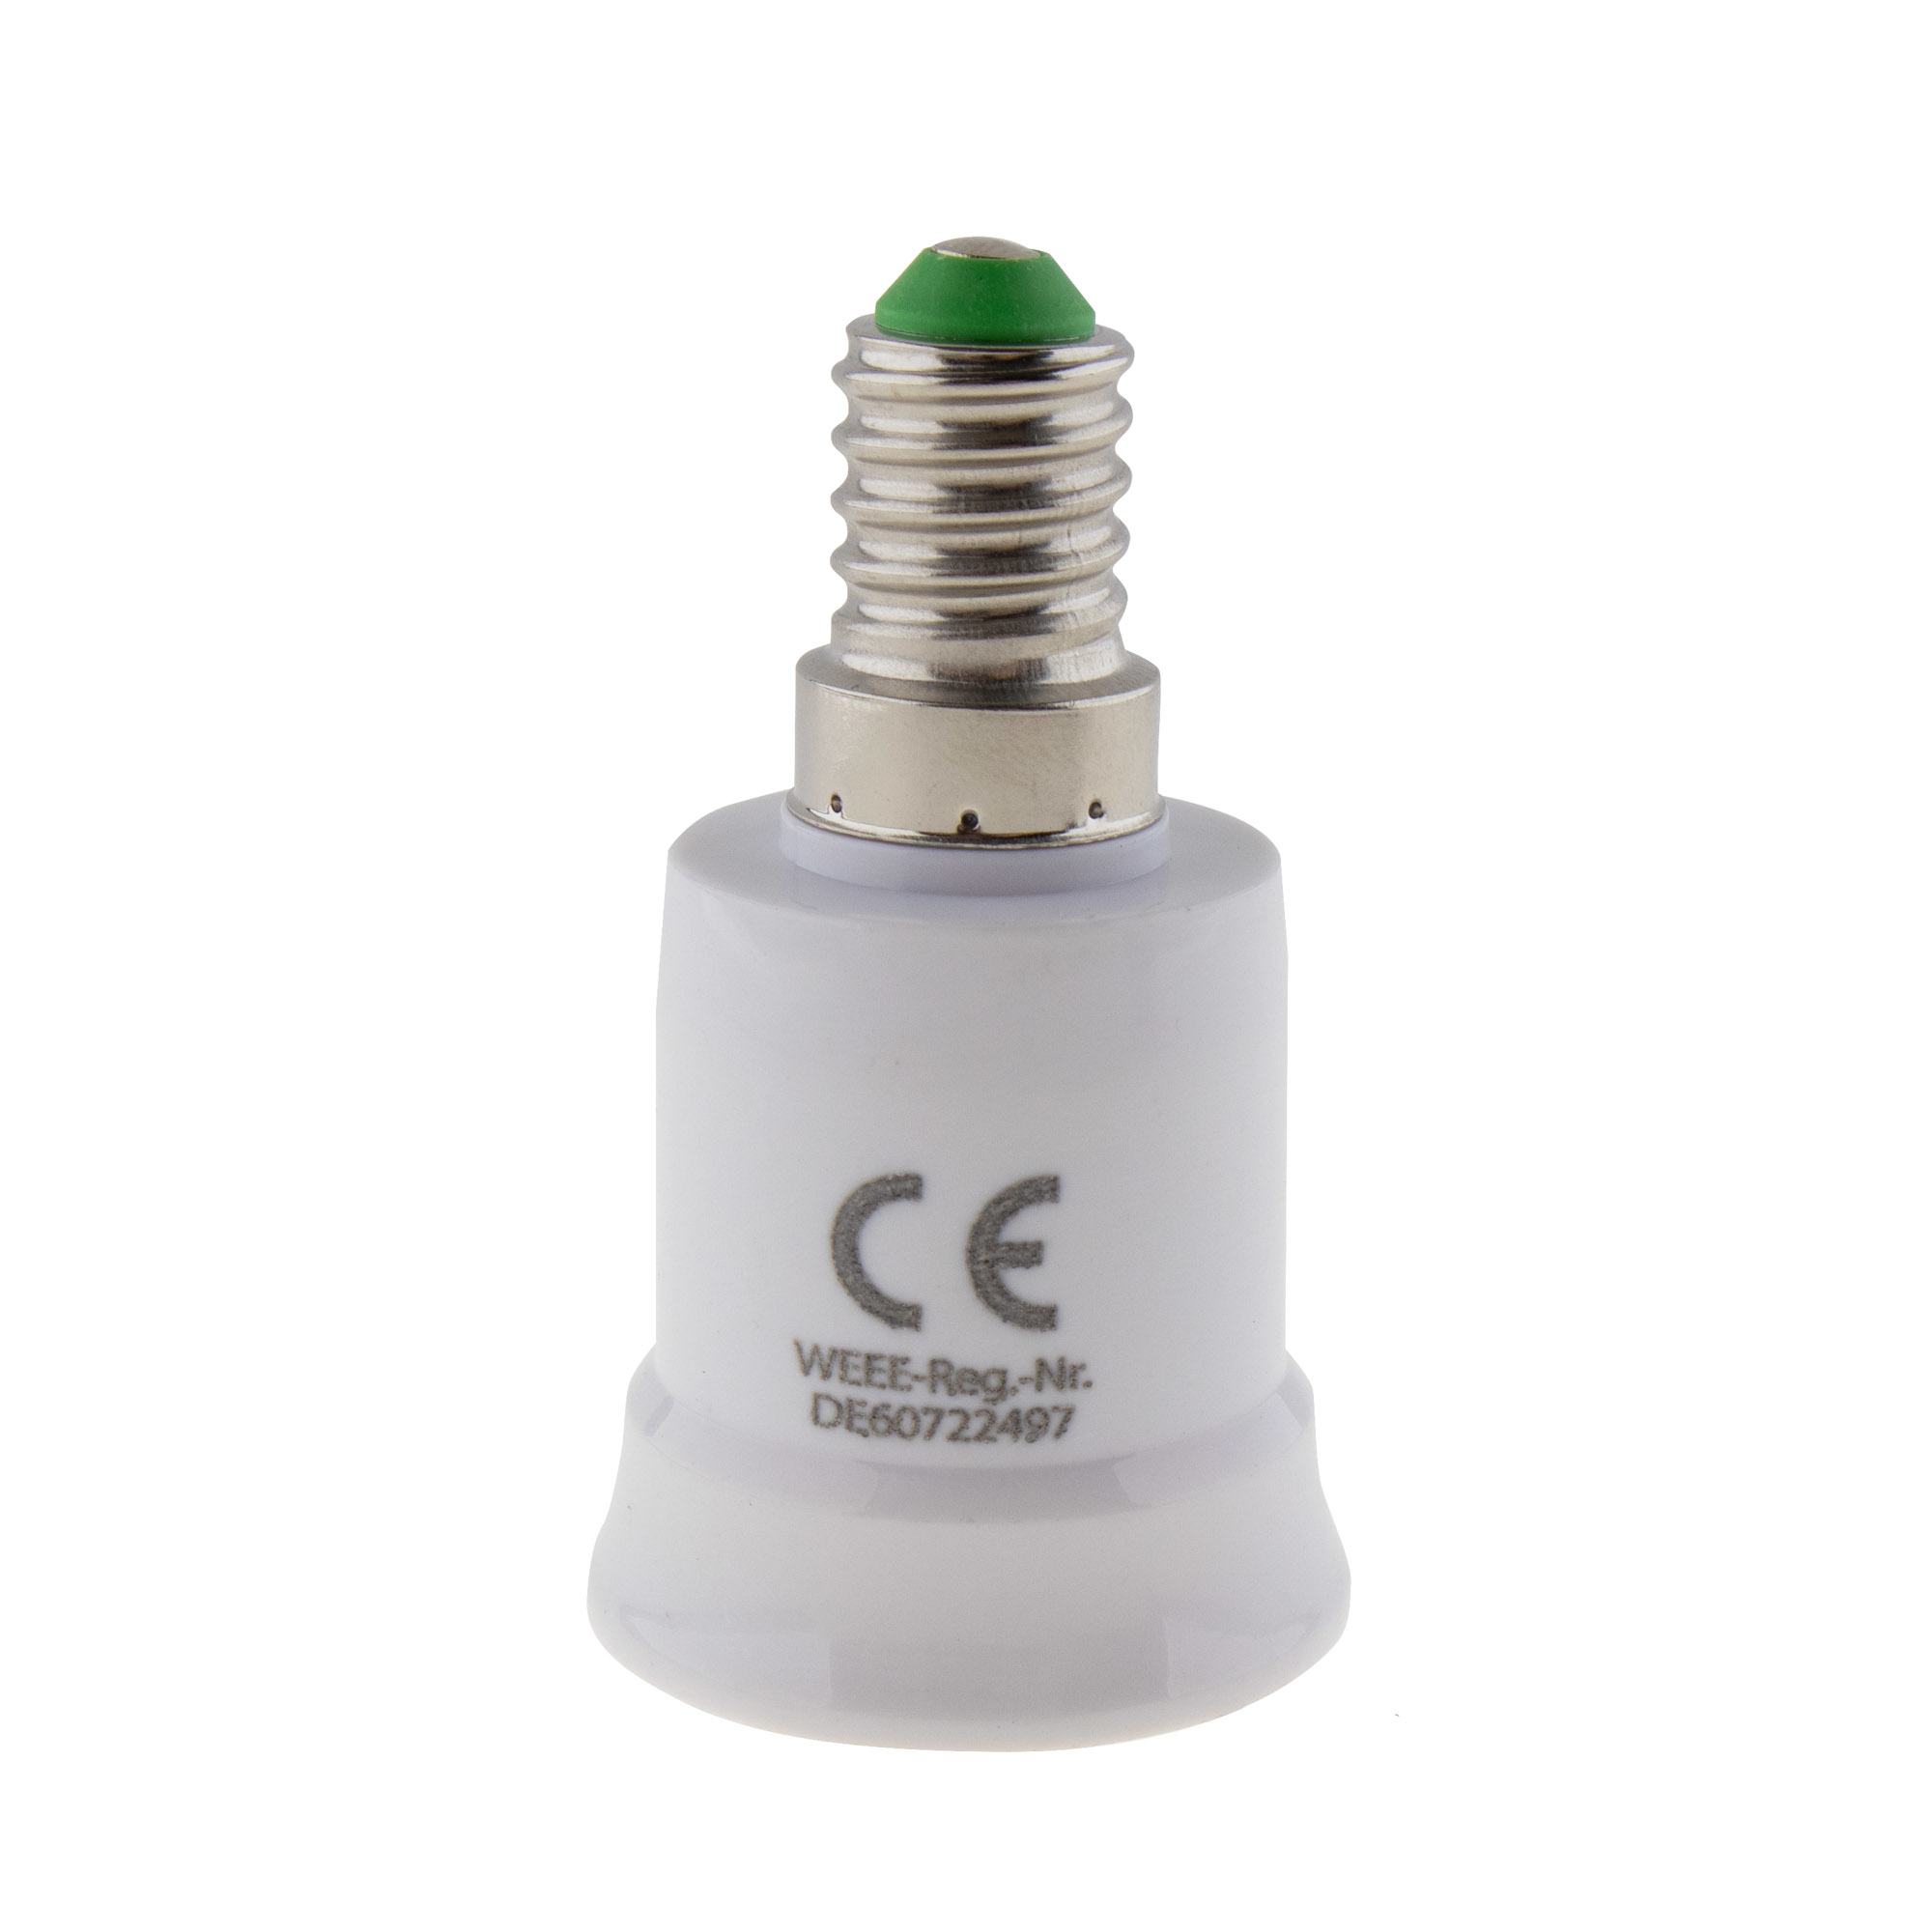 Lamp socket adaptor E14 to E27 - 4PCS